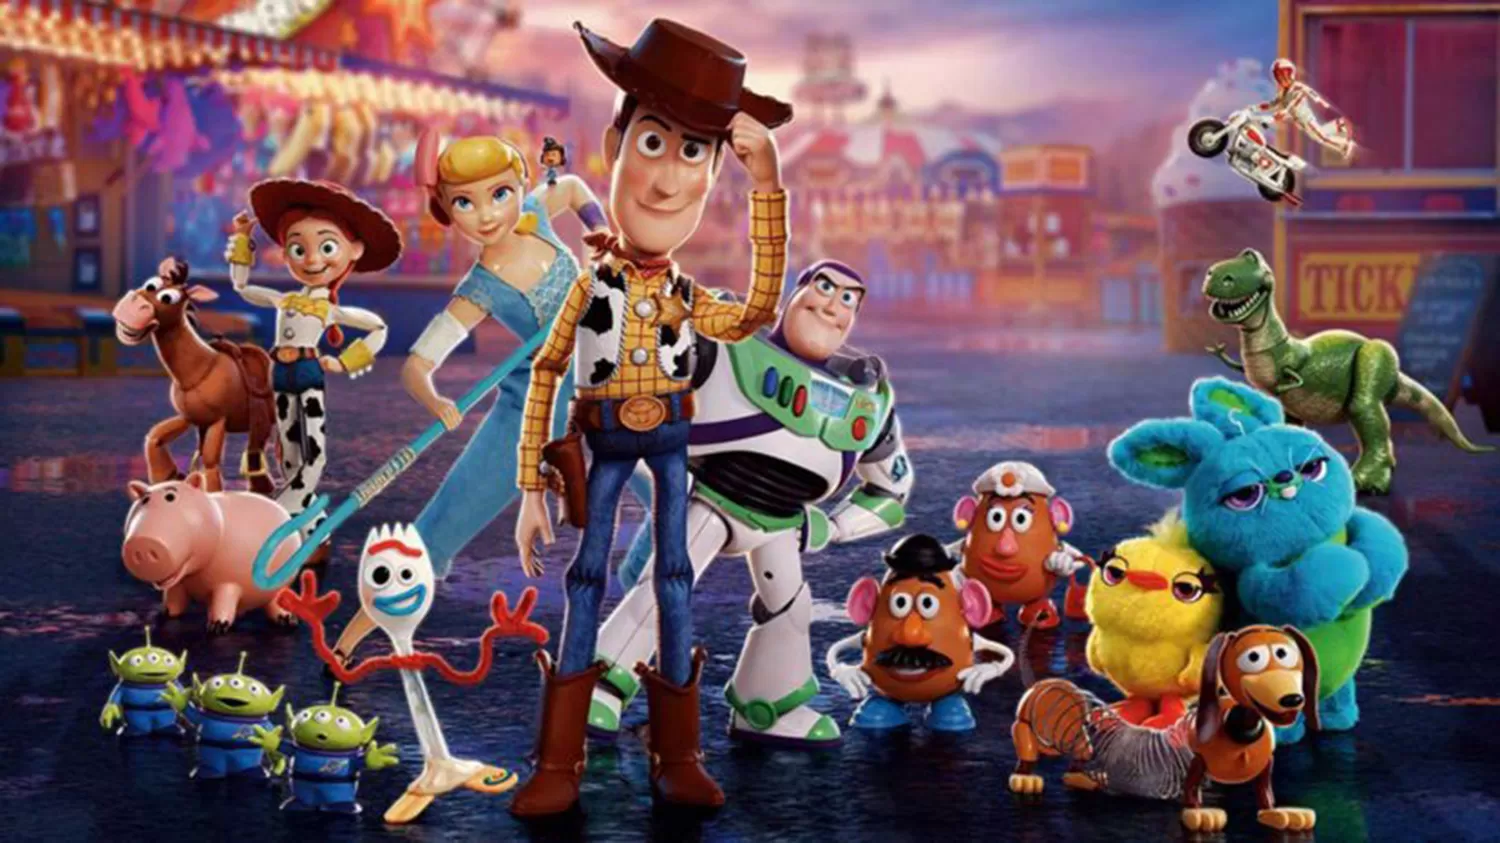 Autocine en Yerba Buena: proyectan “Toy Story 4”